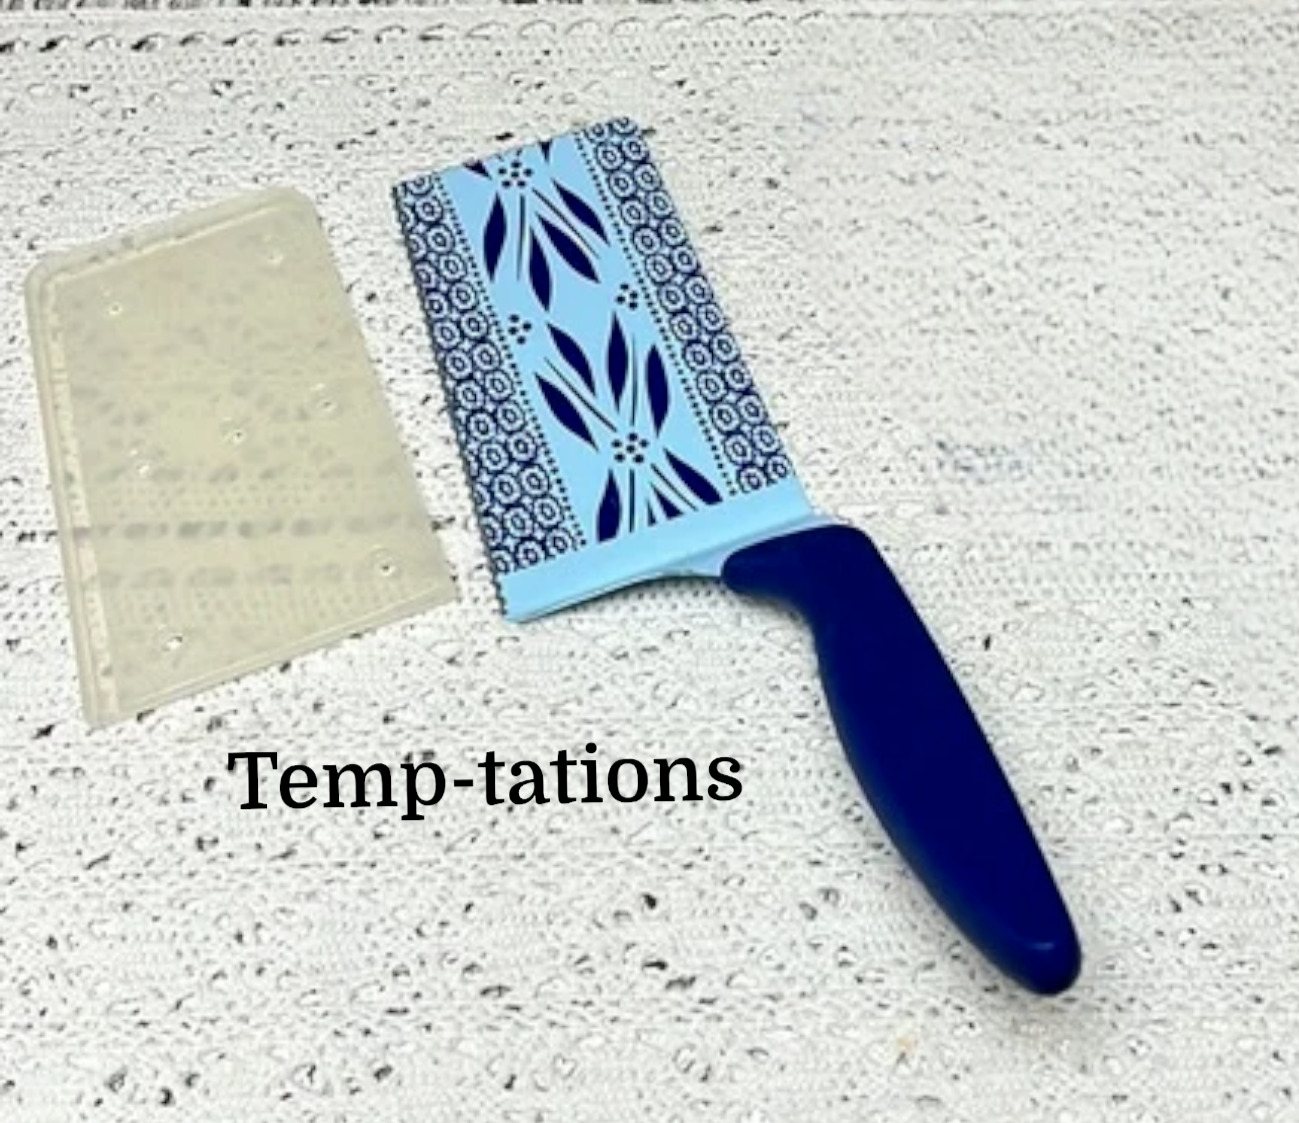 Temp-tations Temptations Old World Blue Serrated Edge Pie Server Spatula Cake